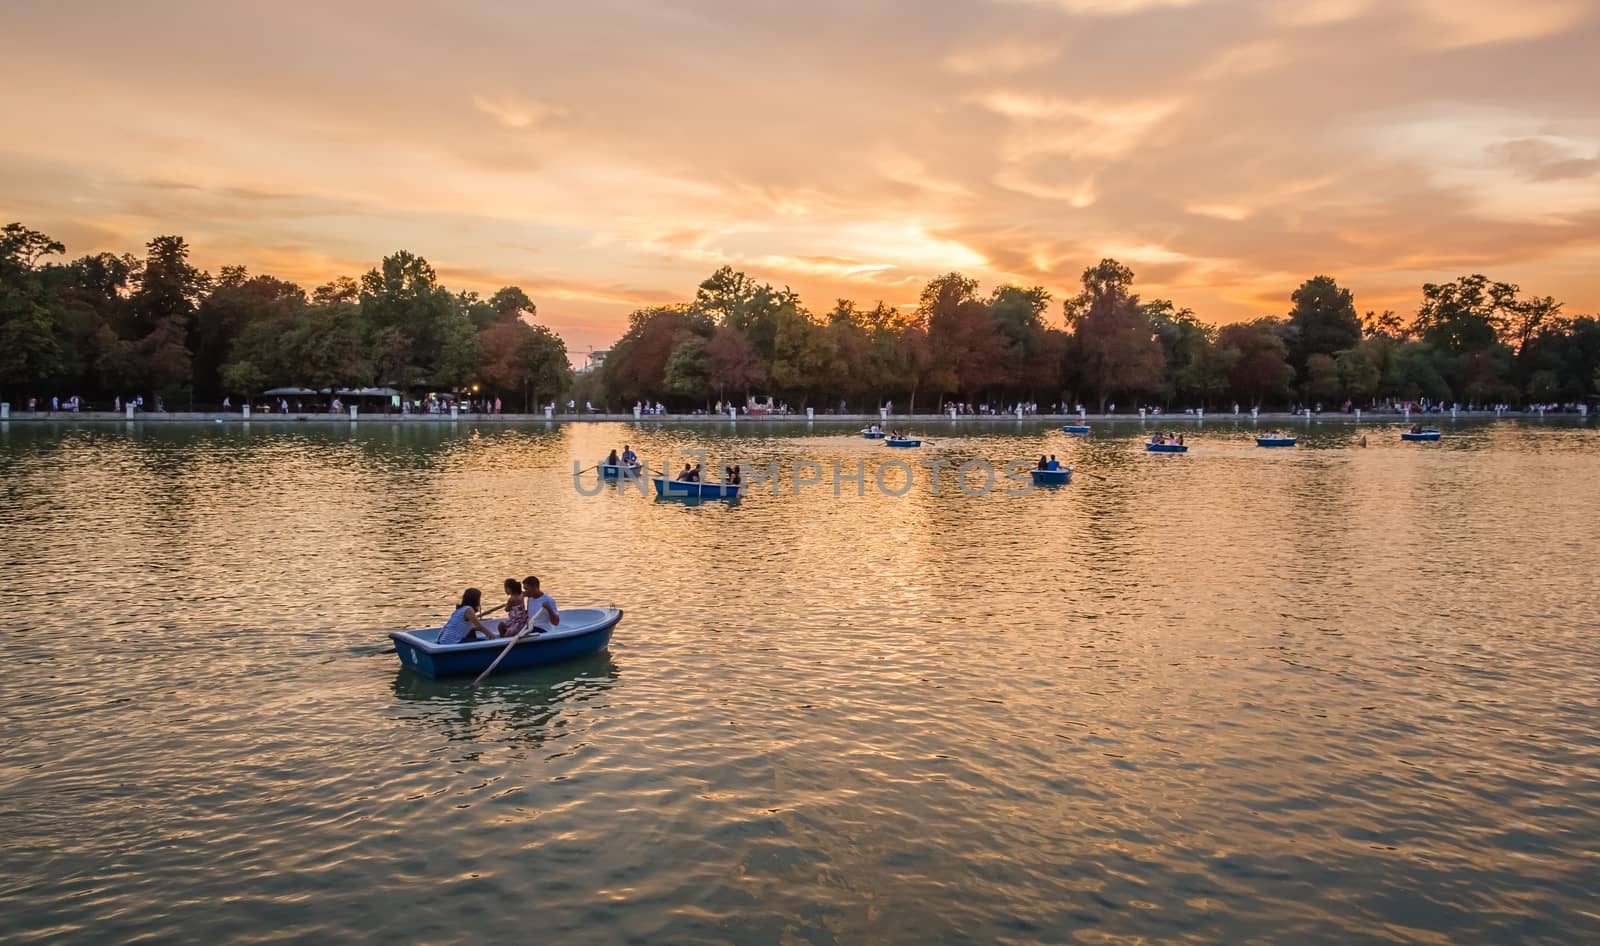 People boating in Buen Retiro park lake, Madrid by doble.d